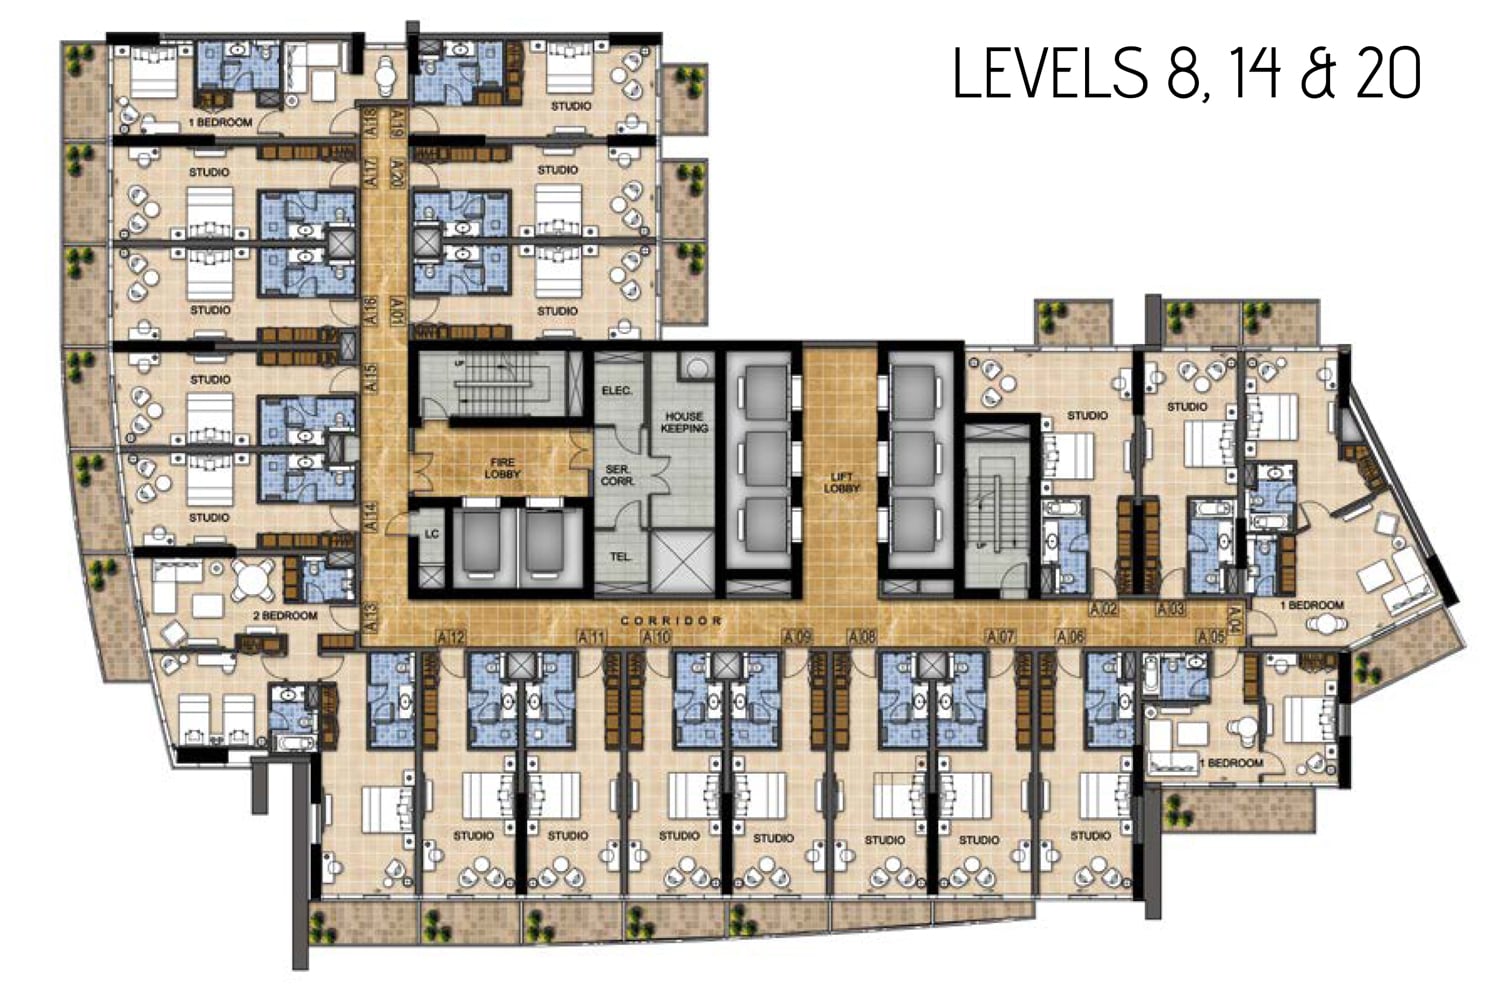 Damac Radisson Hotel Floor Plans and Sizes at Damac Hills